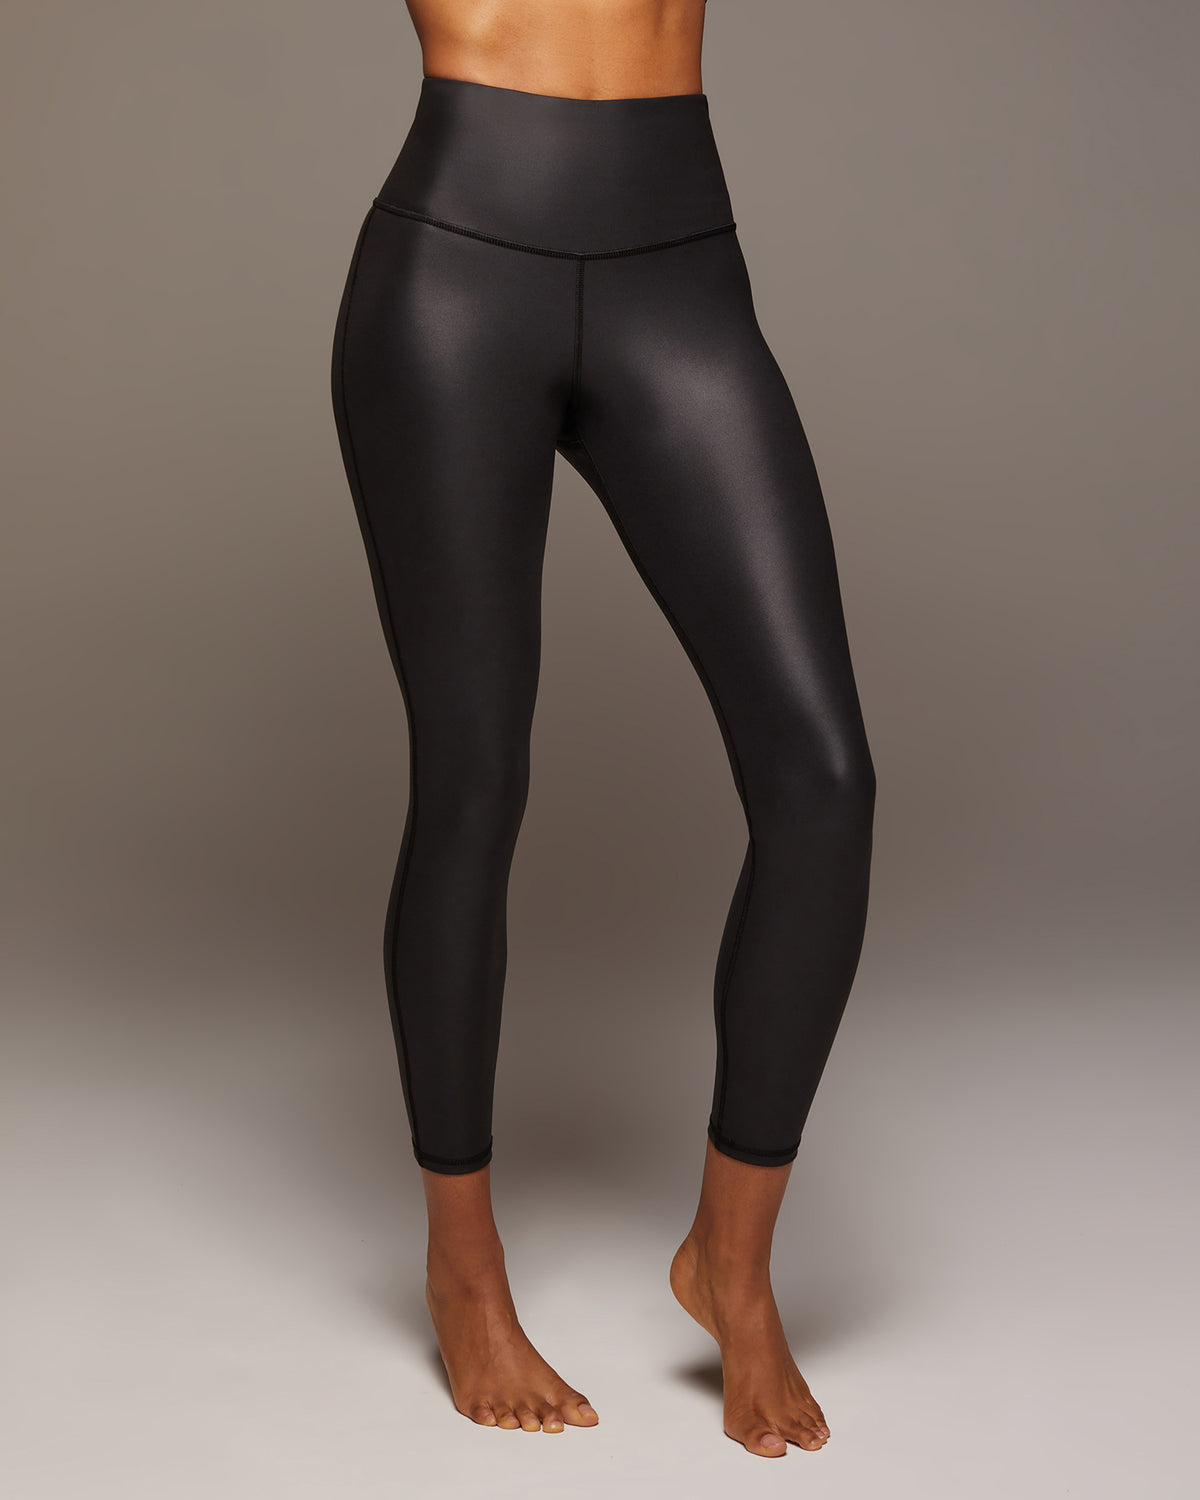 Shop Gloss the | Activewear Instinct MICHI Women\'s Designer Legging